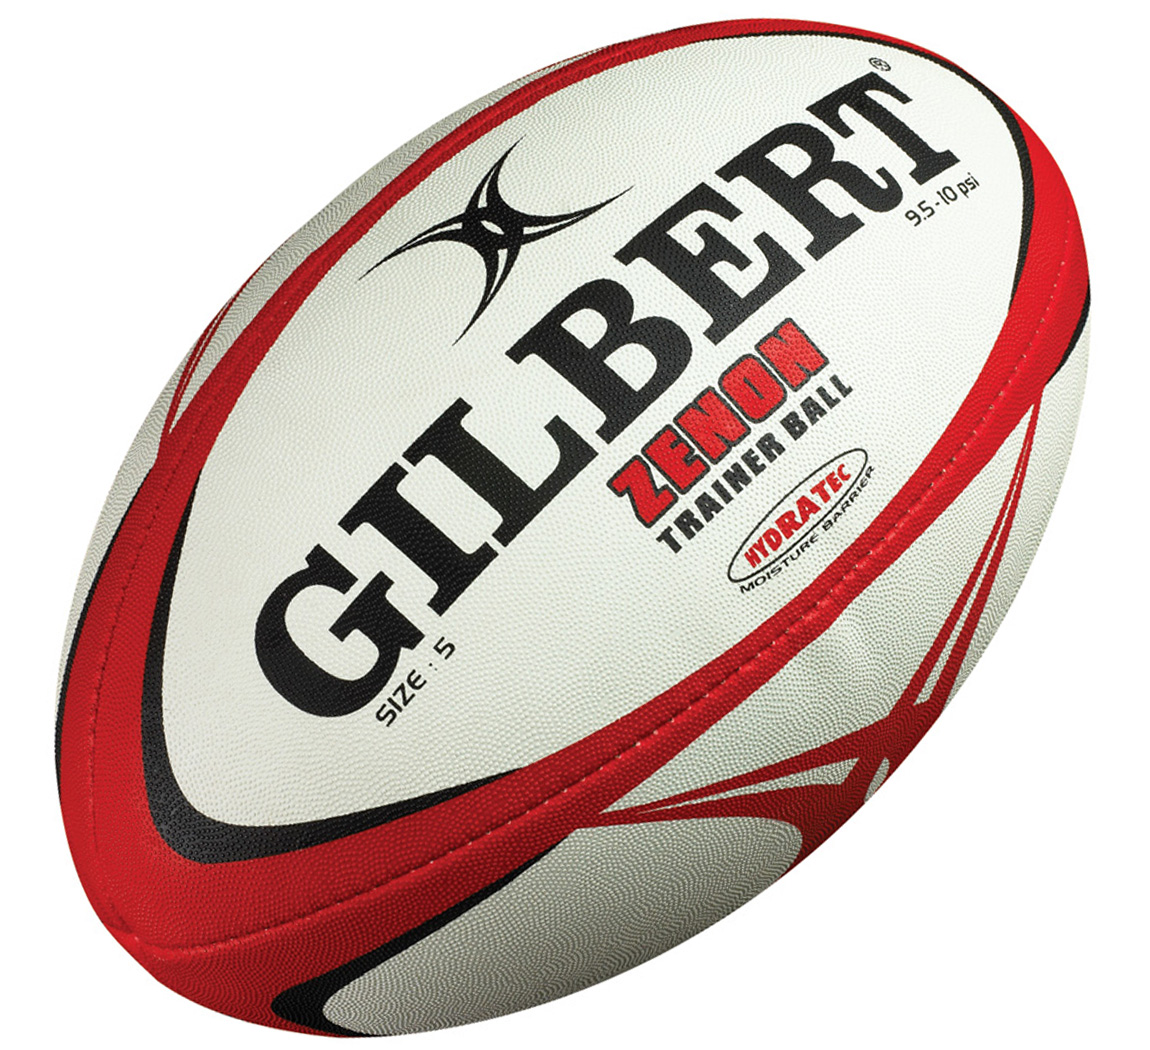 Gilbert Zenon Practice Rugby Ball